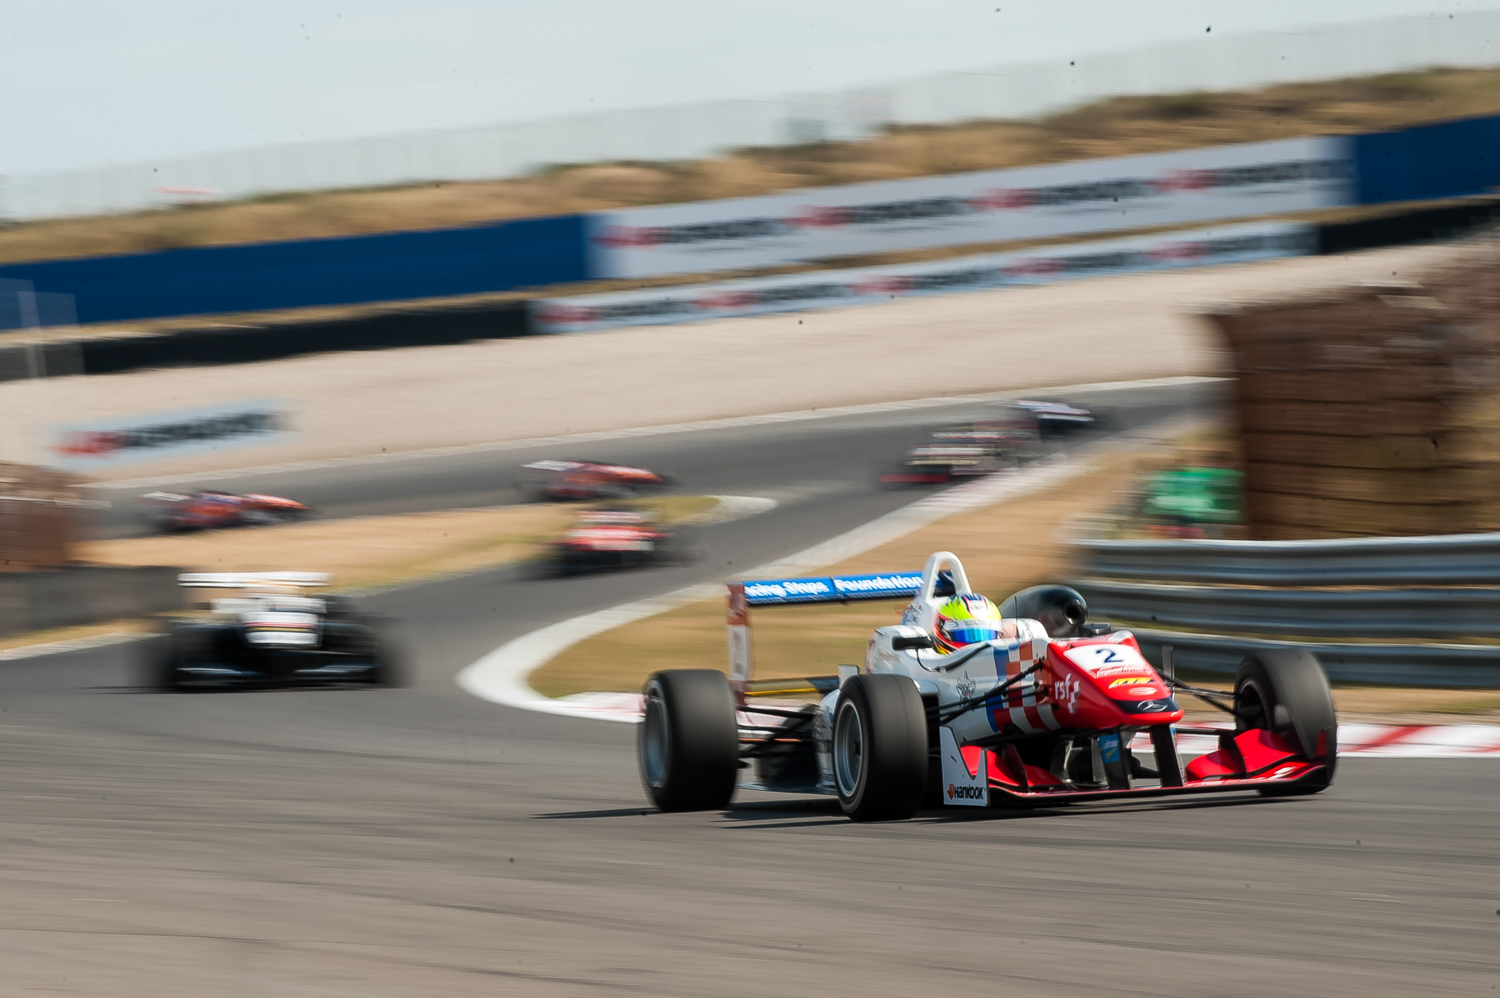 #2 Jake Dennis - Prema Powerteam - FIA Formula 3 European Championship